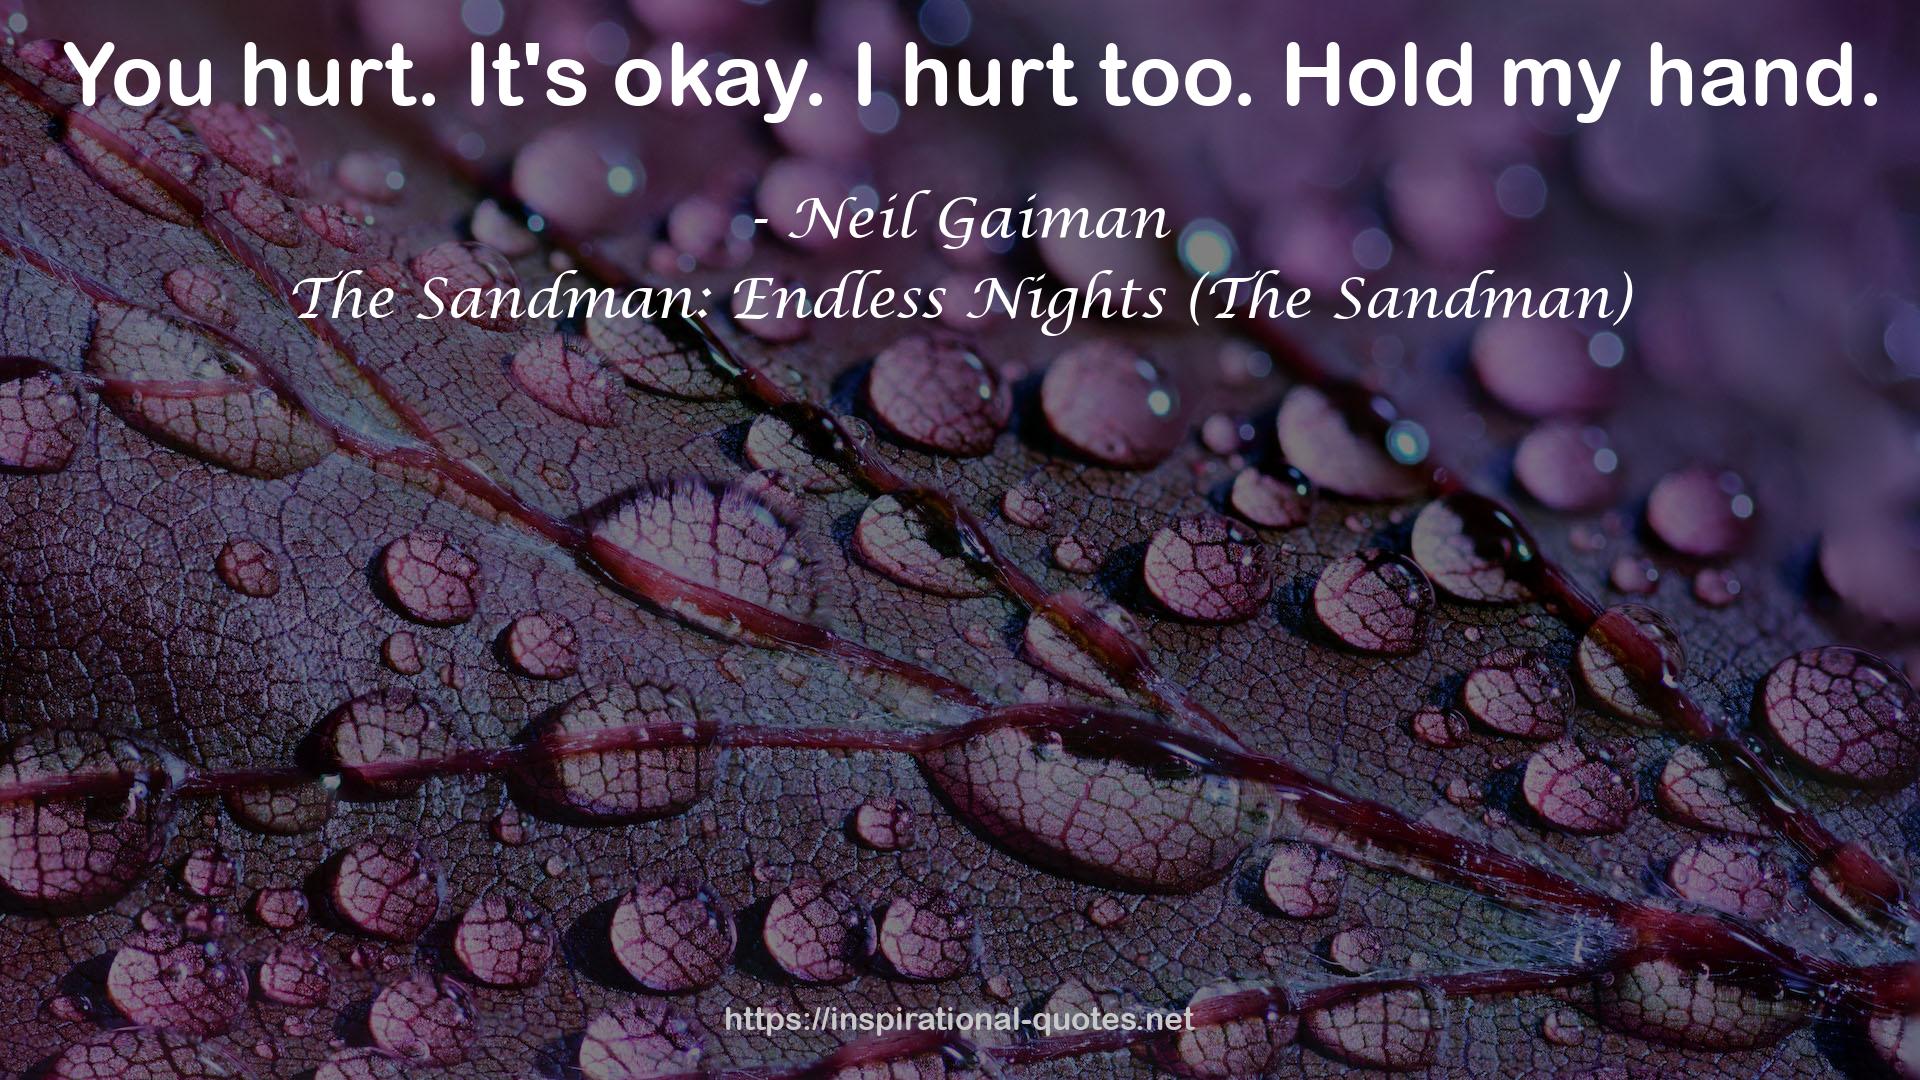 The Sandman: Endless Nights (The Sandman) QUOTES